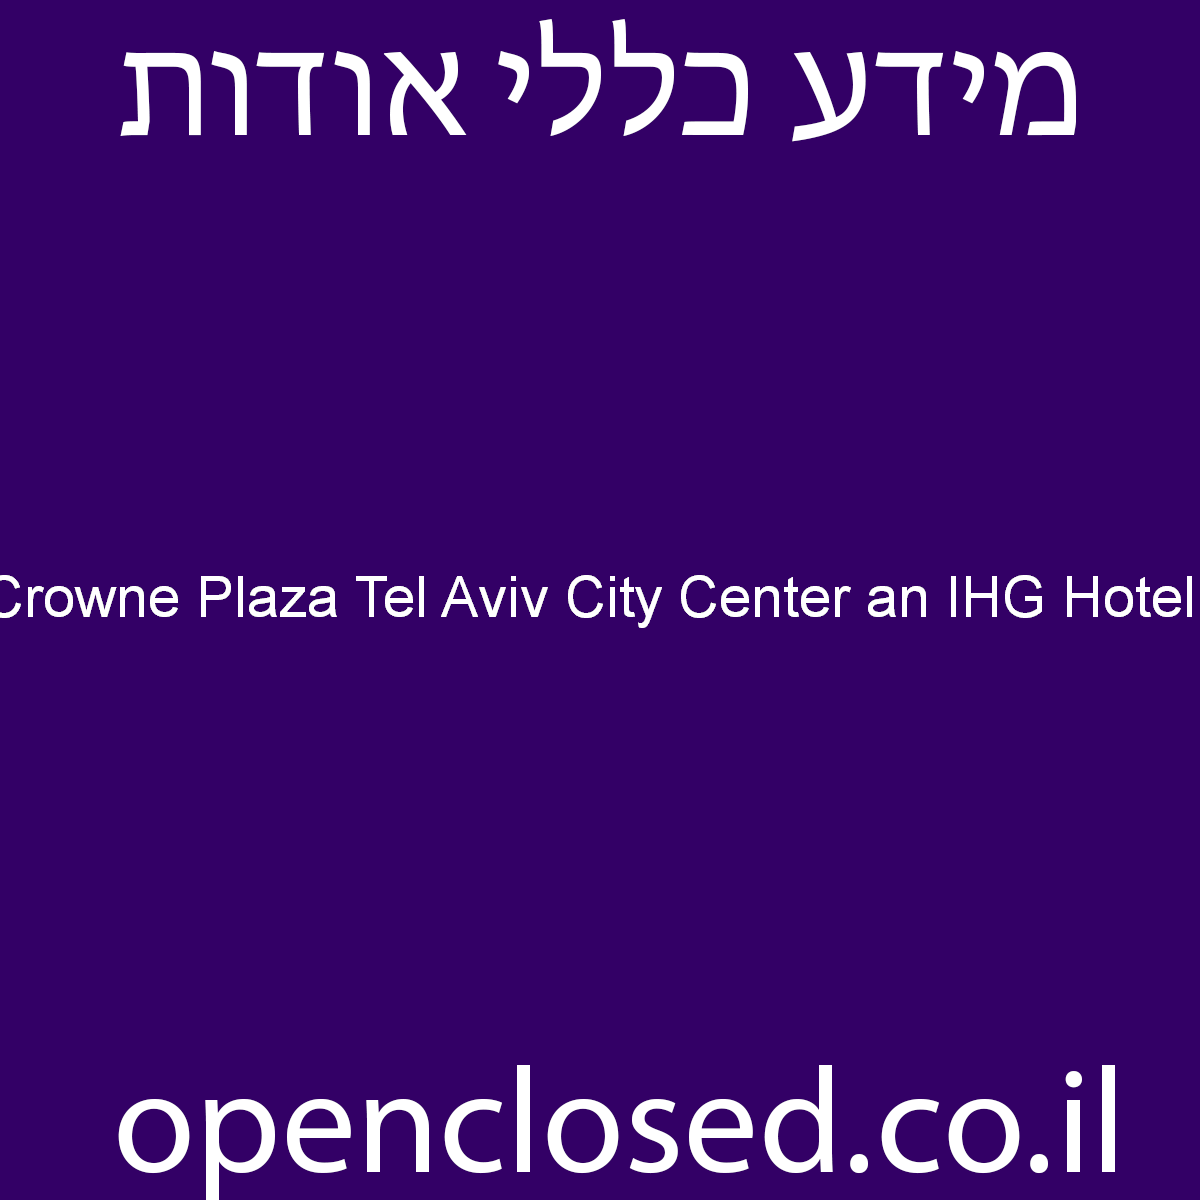 Crowne Plaza Tel Aviv City Center an IHG Hotel